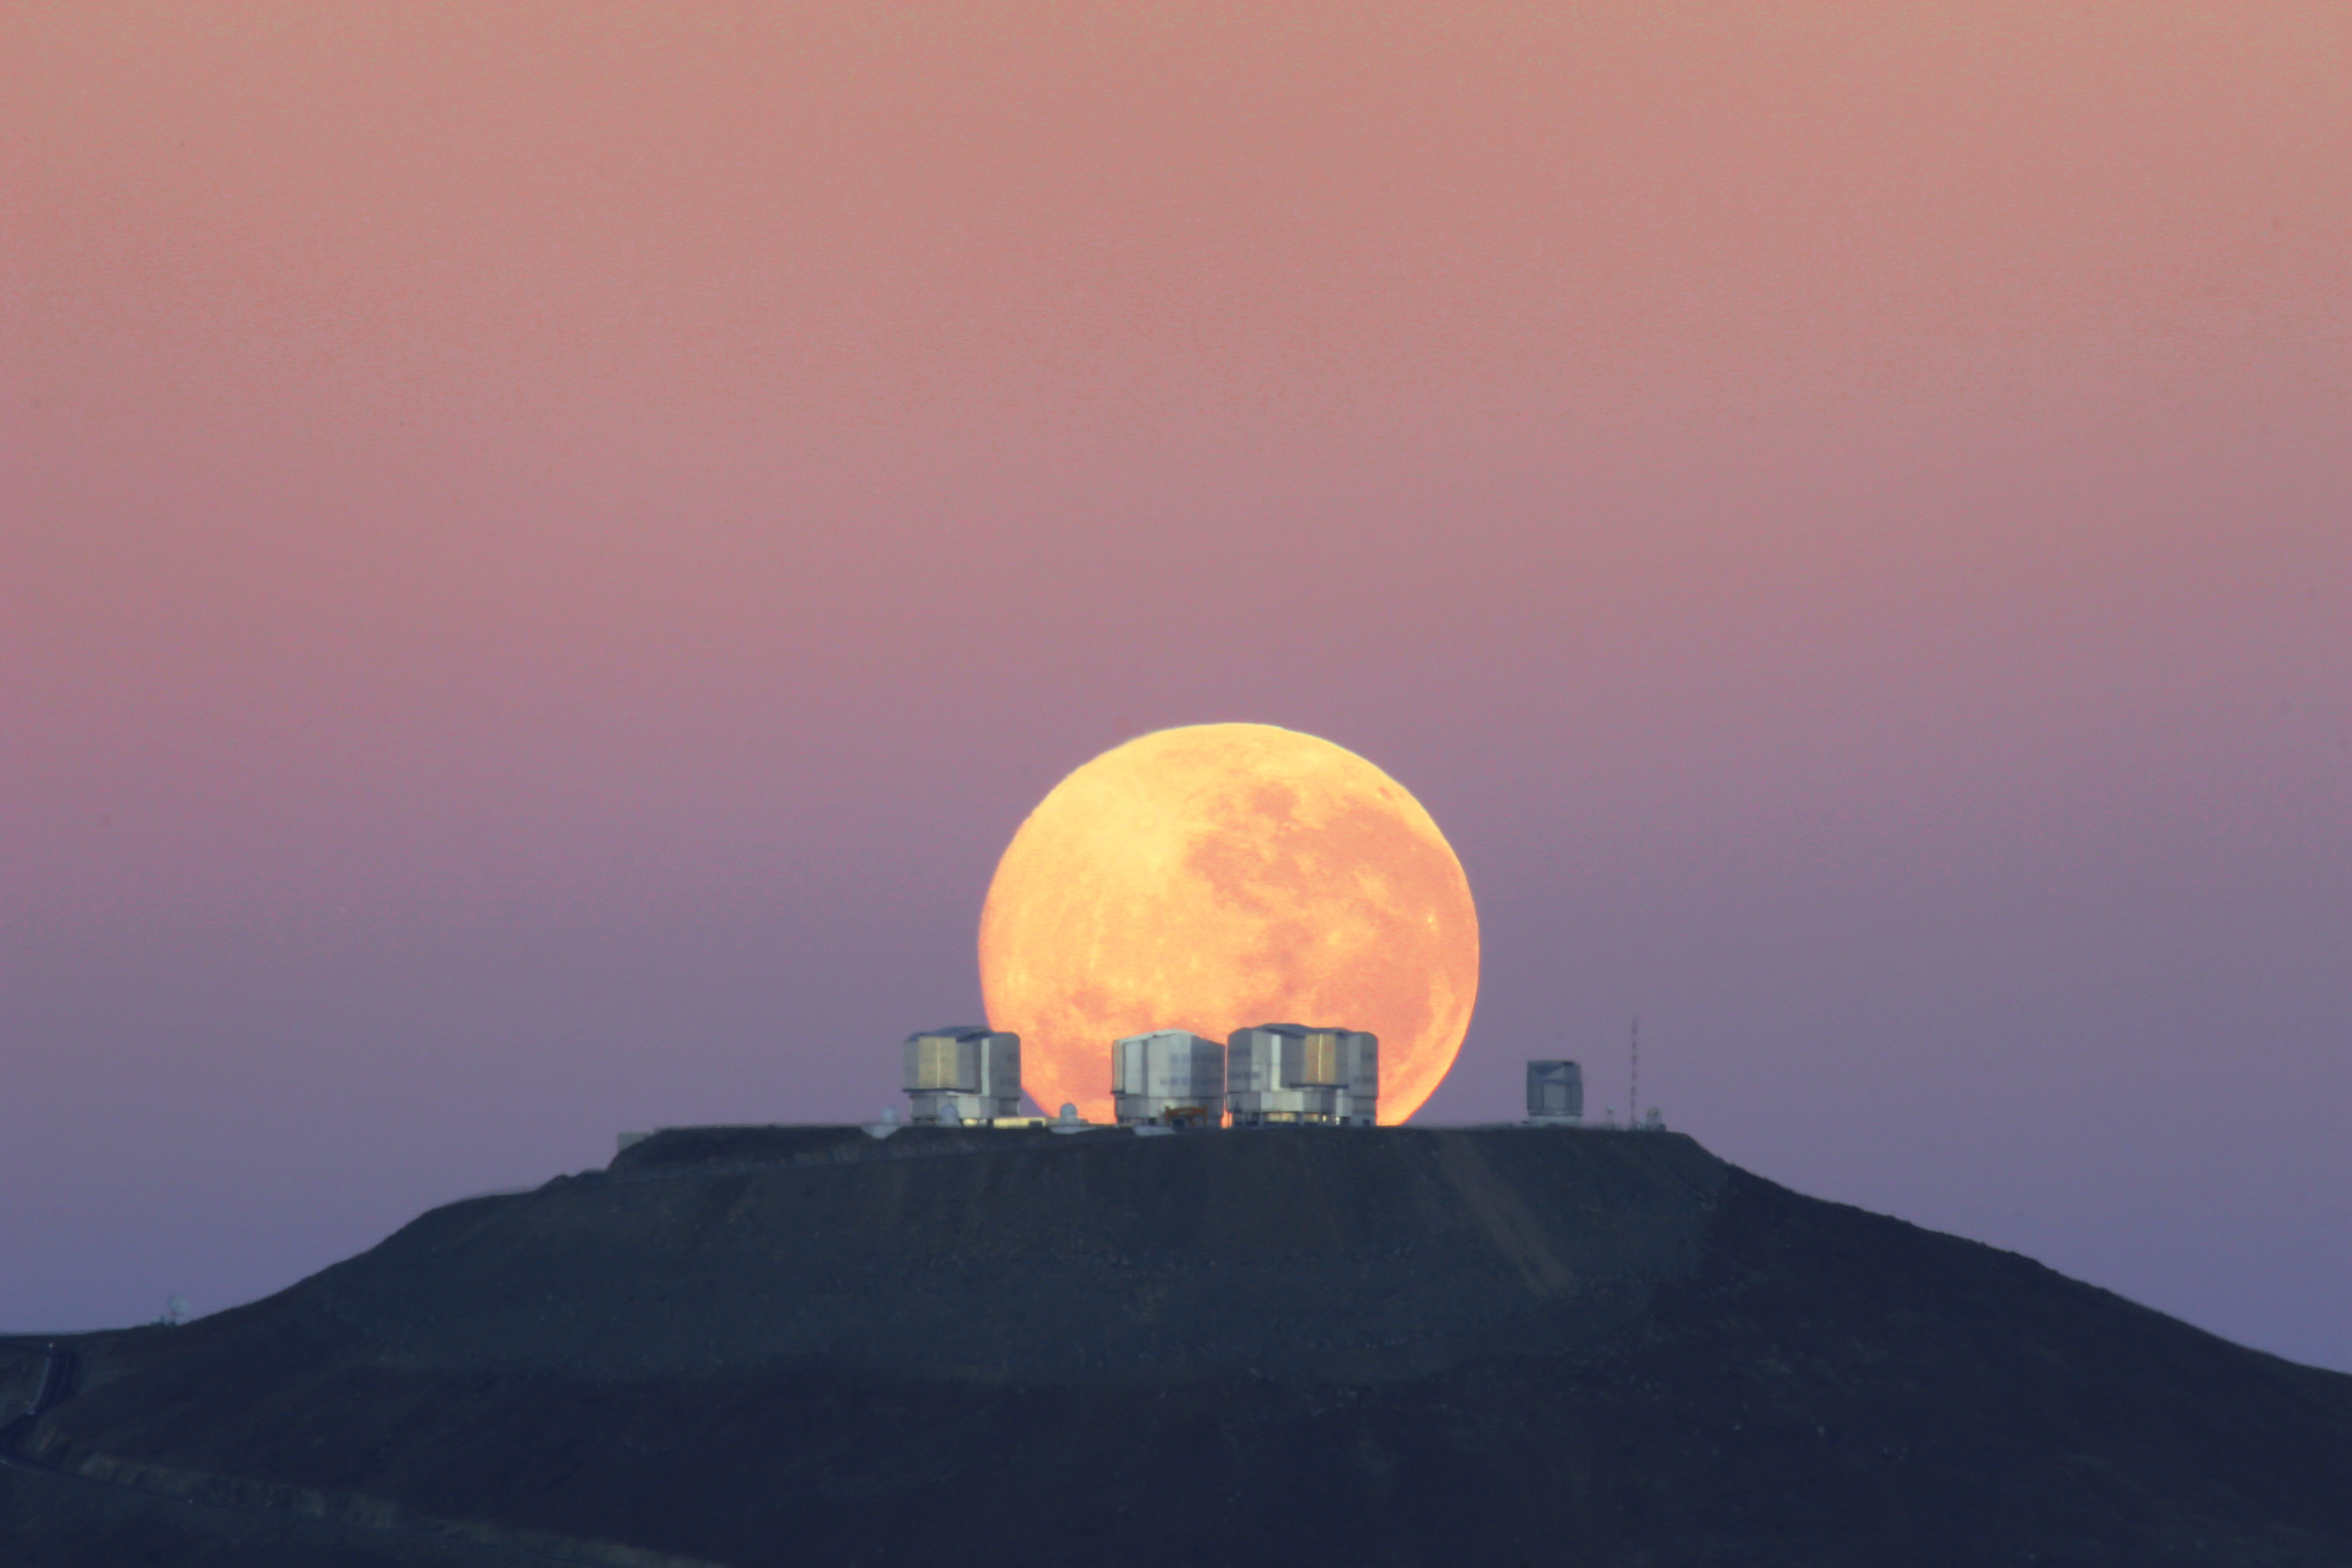 Moonset_over_ESO's_Very_Large_Telescope.jpg